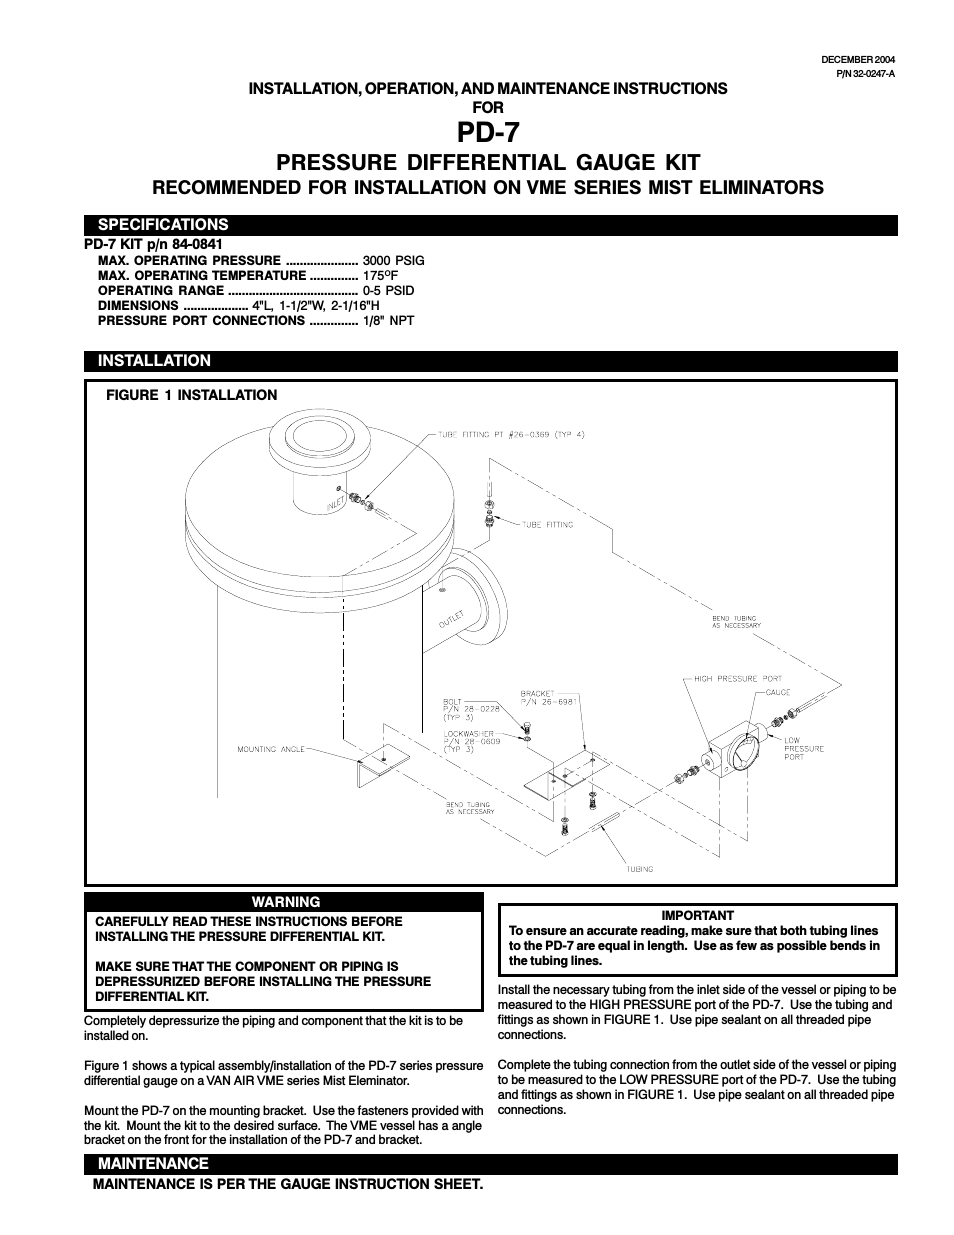 PD-7 Pressure Differential Gauge Kit